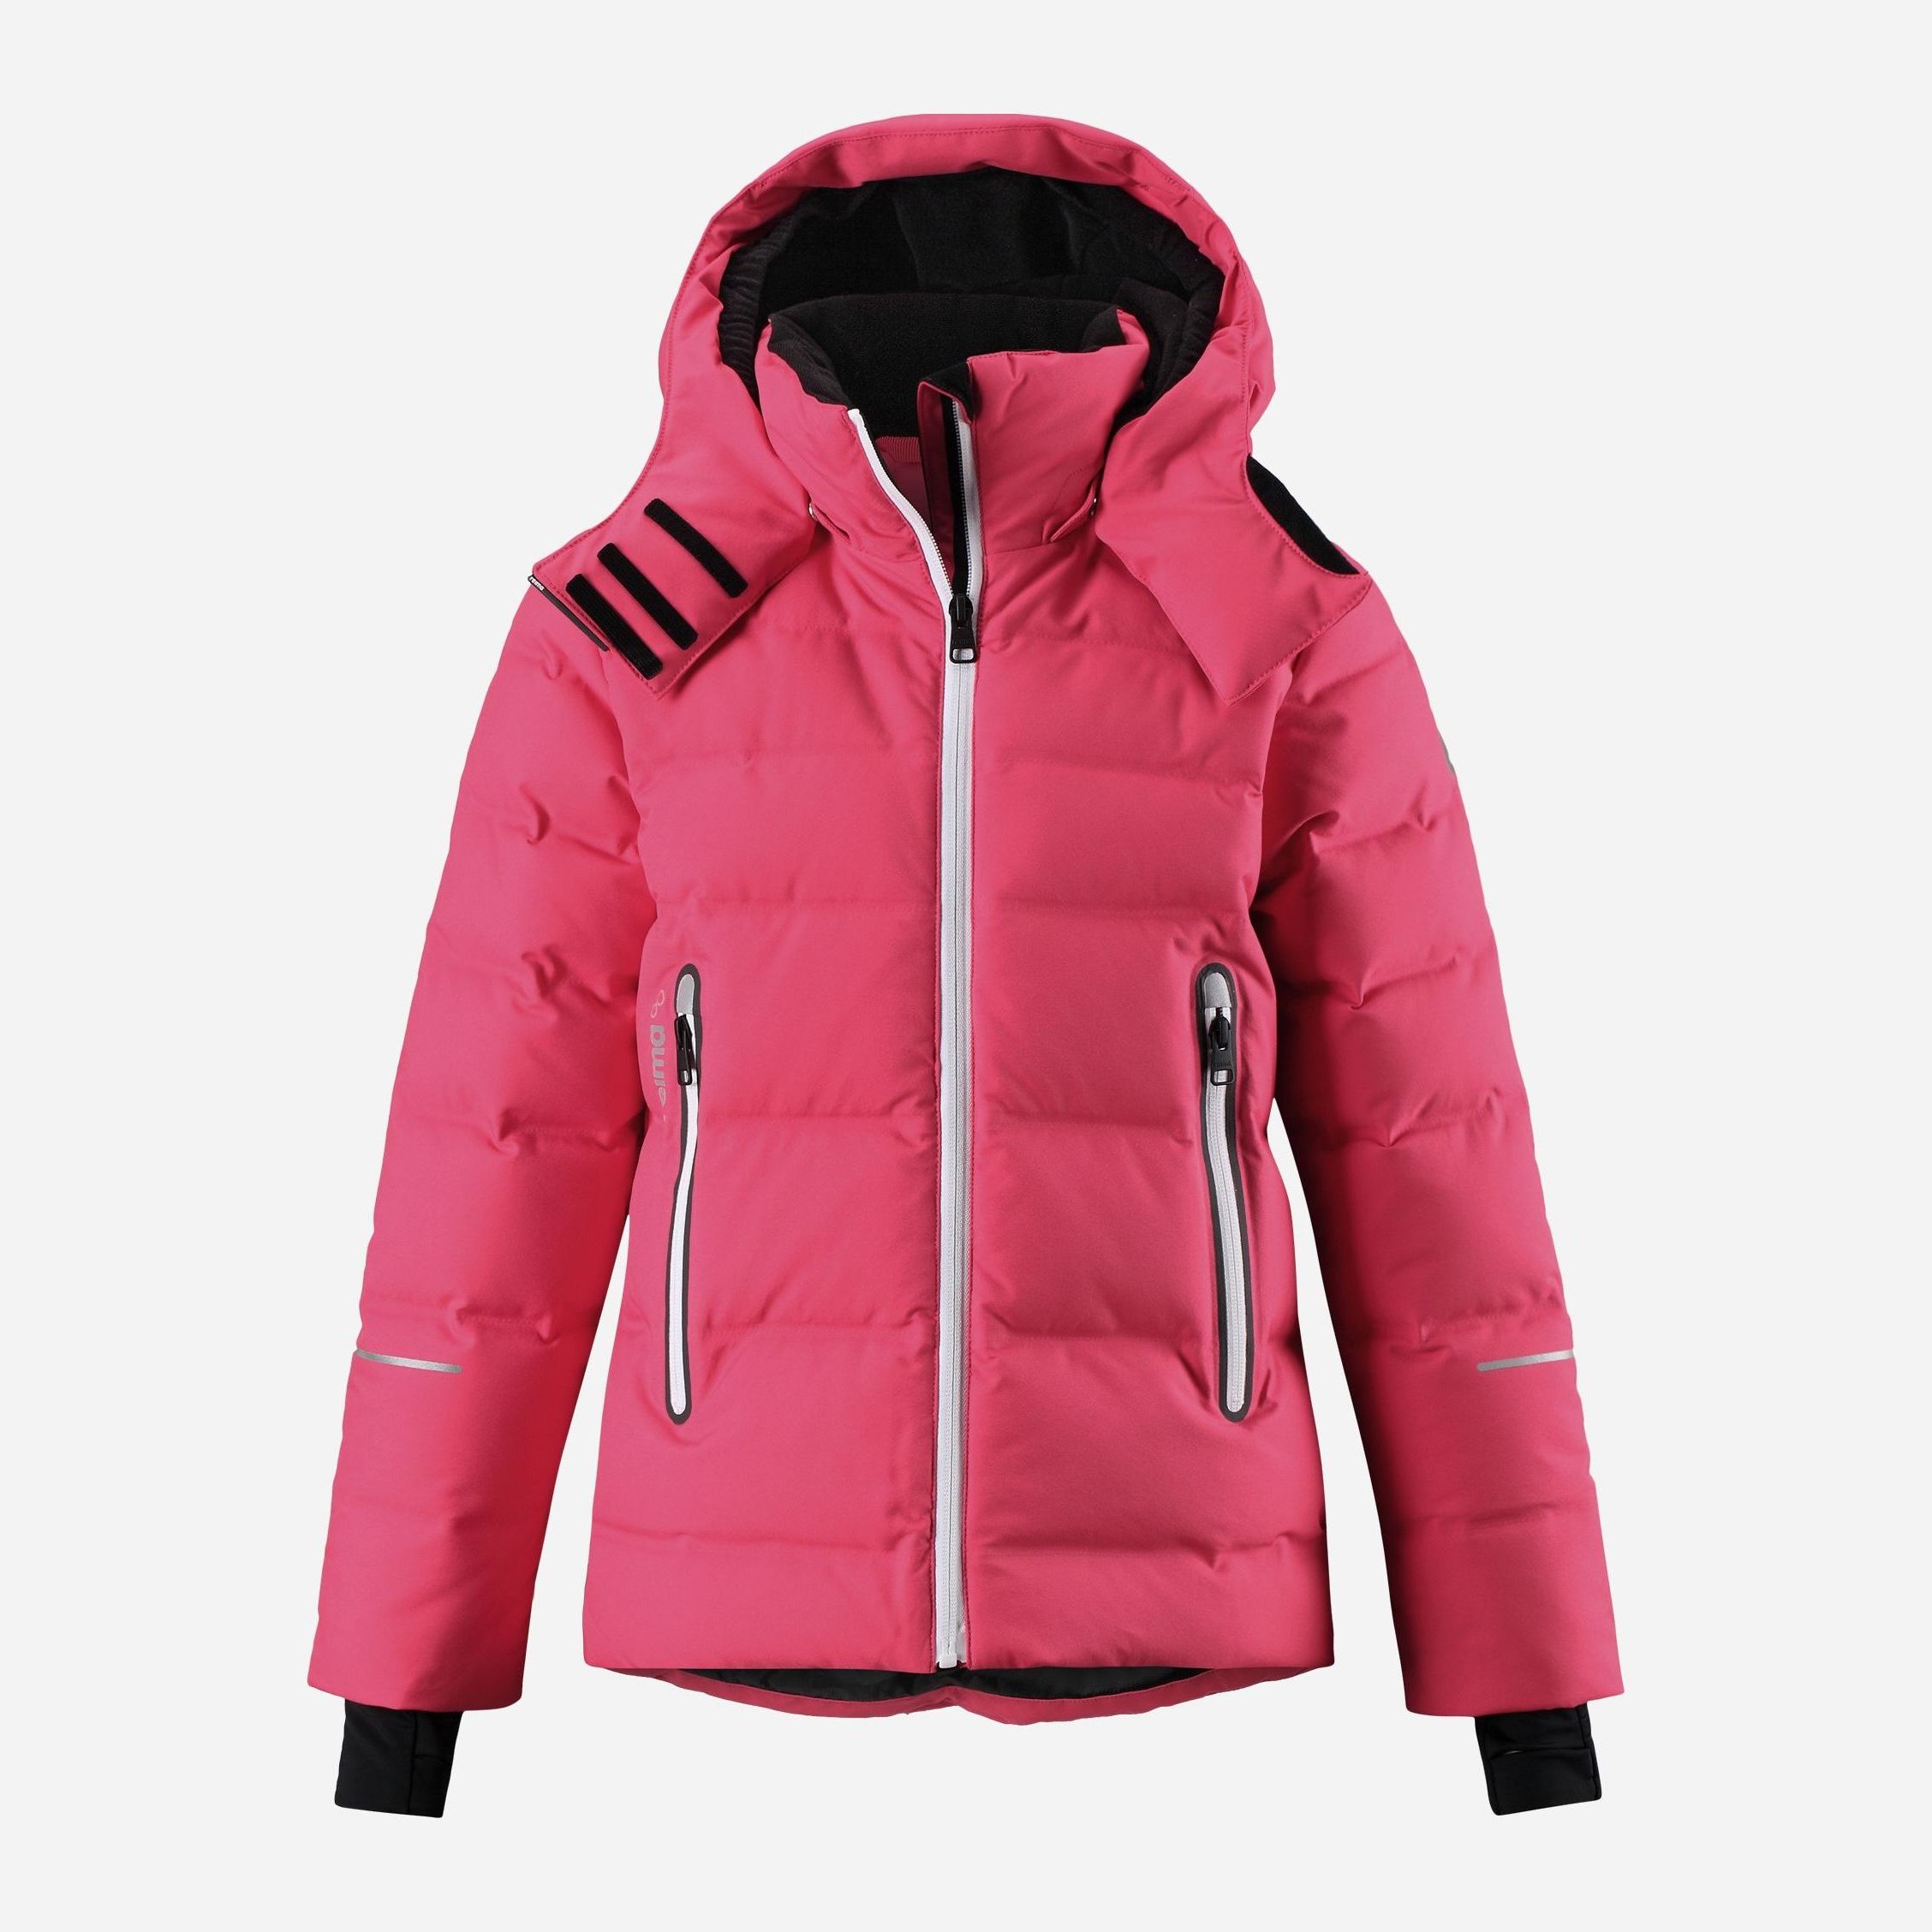 Акция на Дитяча зимова лижна термо куртка для дівчинки Reima 531356-3360 134 см от Rozetka